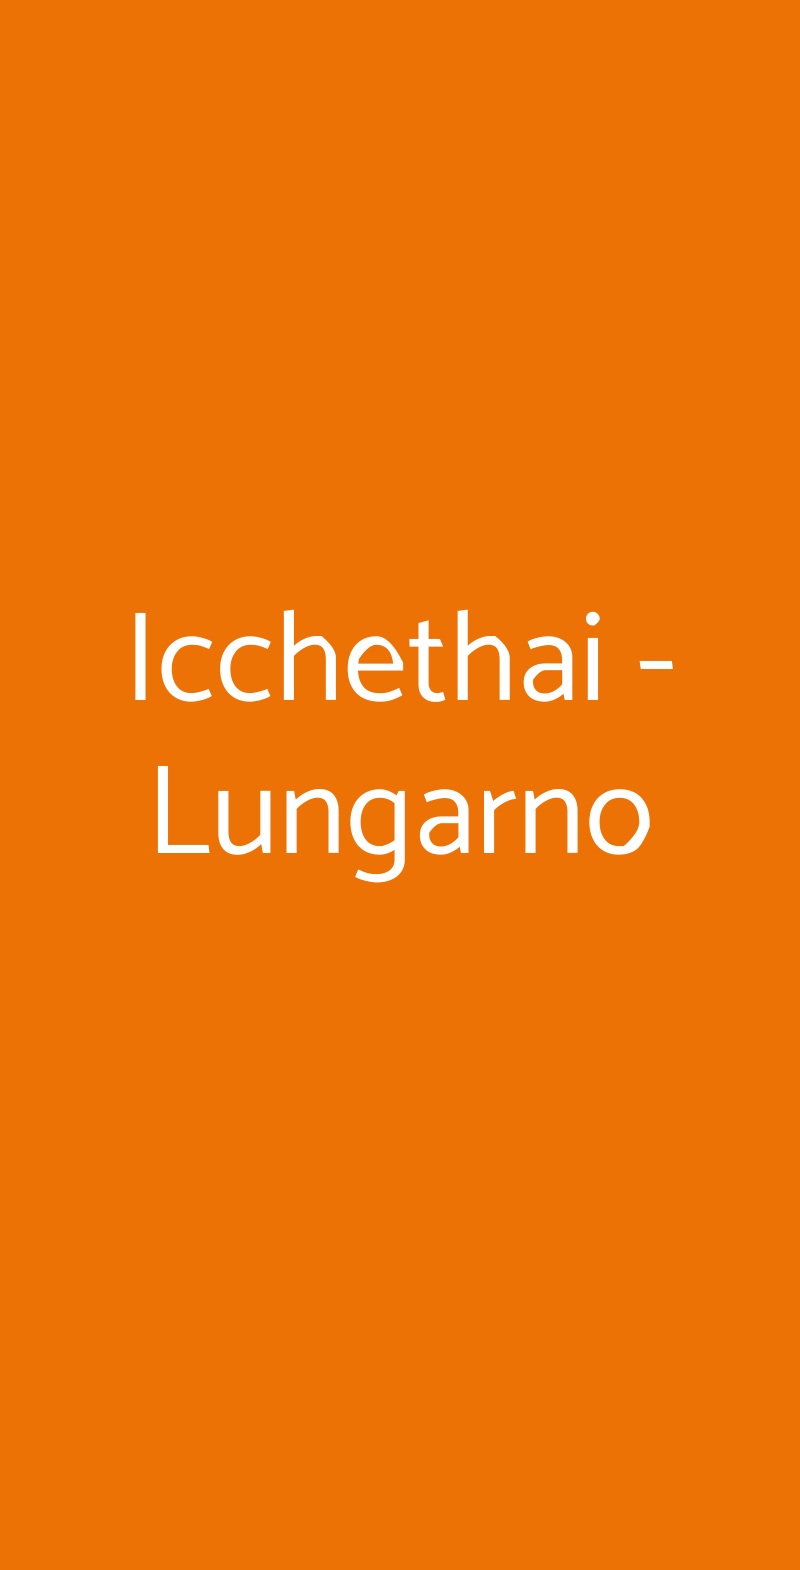 Icchethai - Lungarno Firenze menù 1 pagina